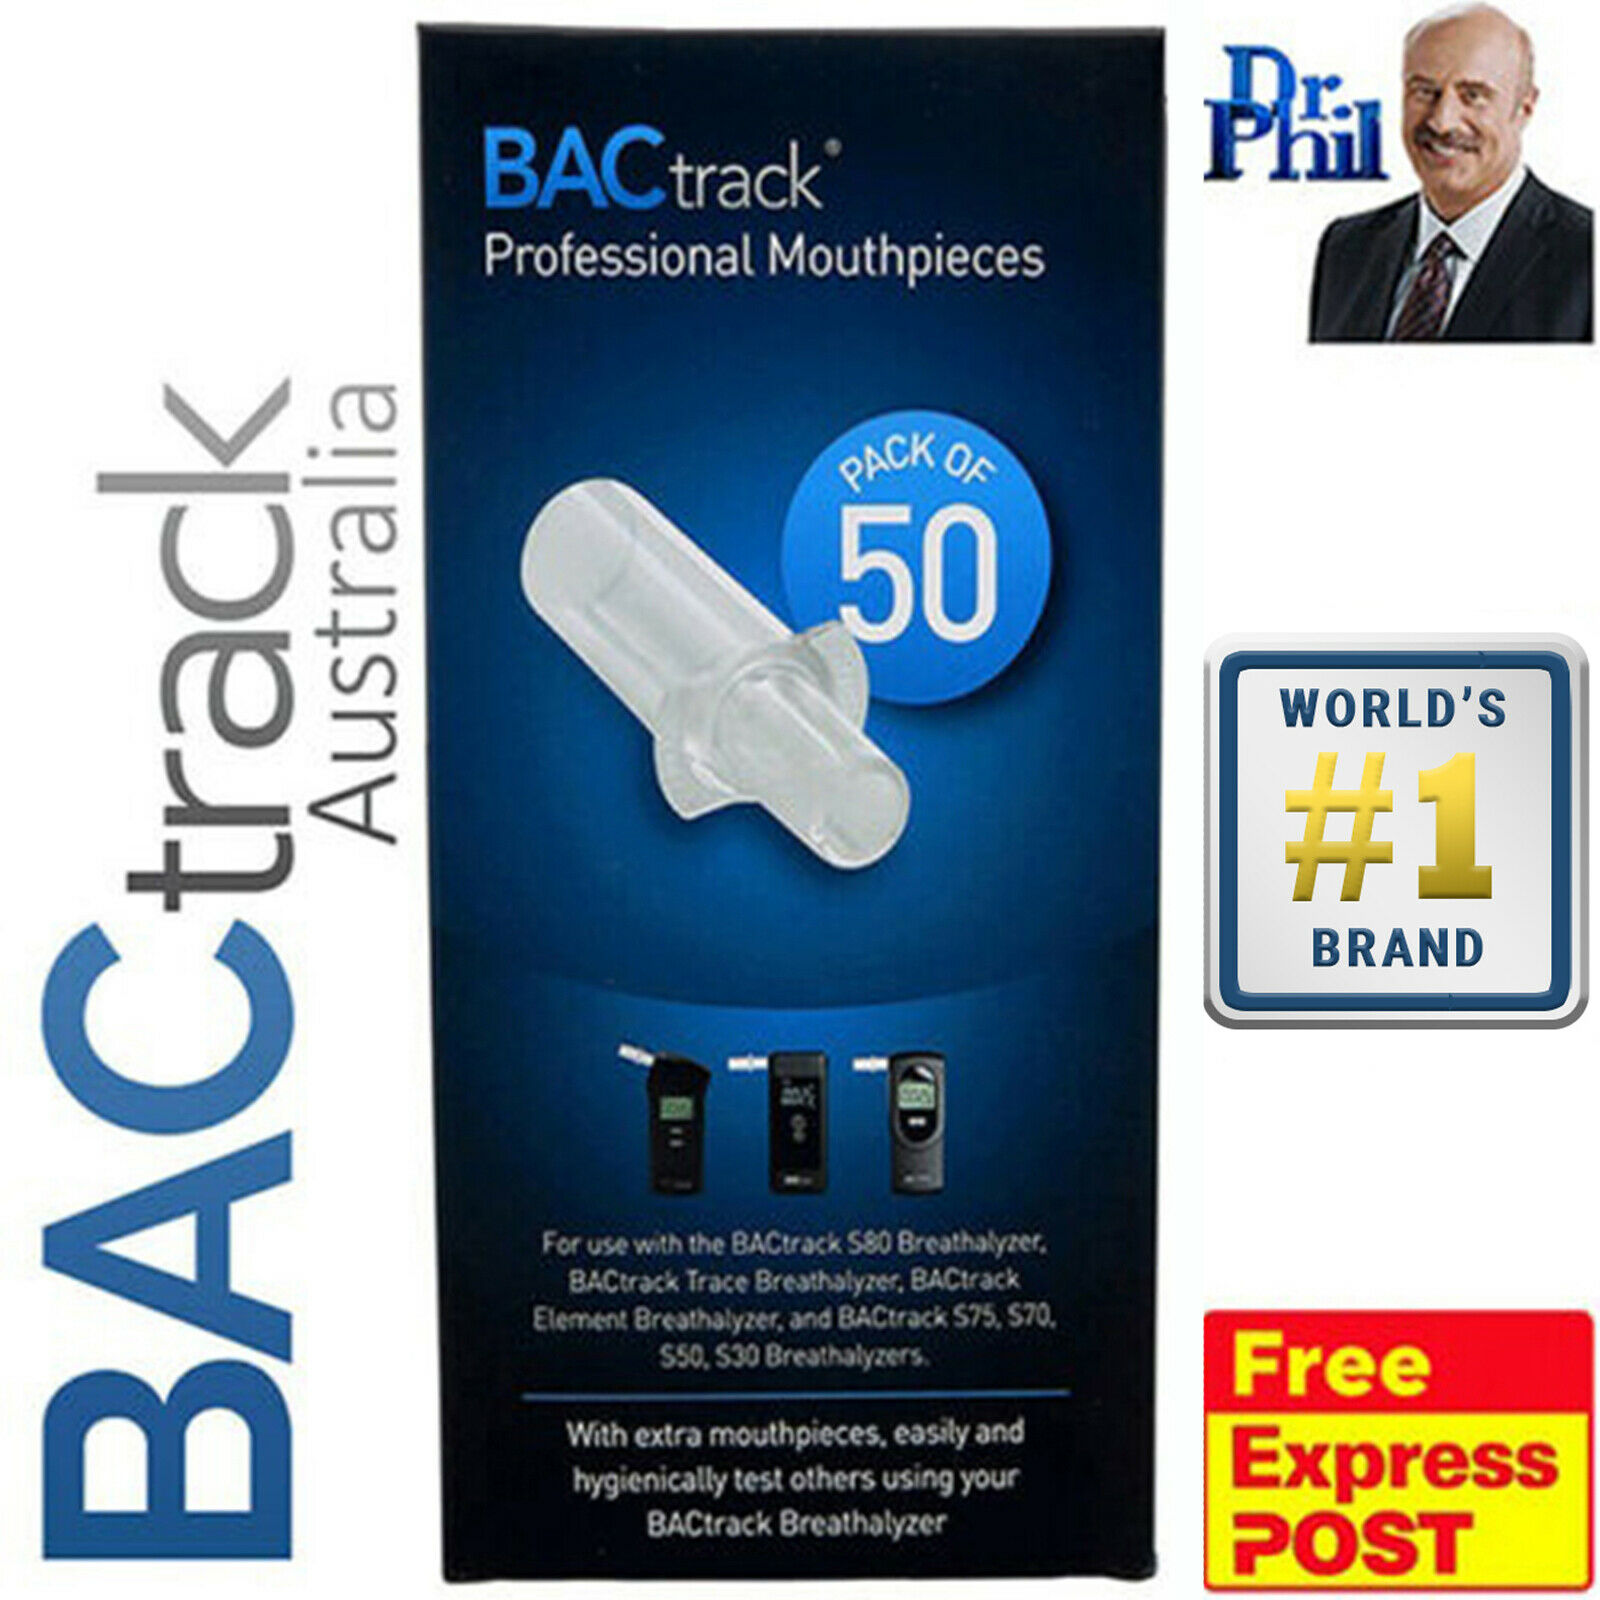 bactrack-pro-mouthpiece-50